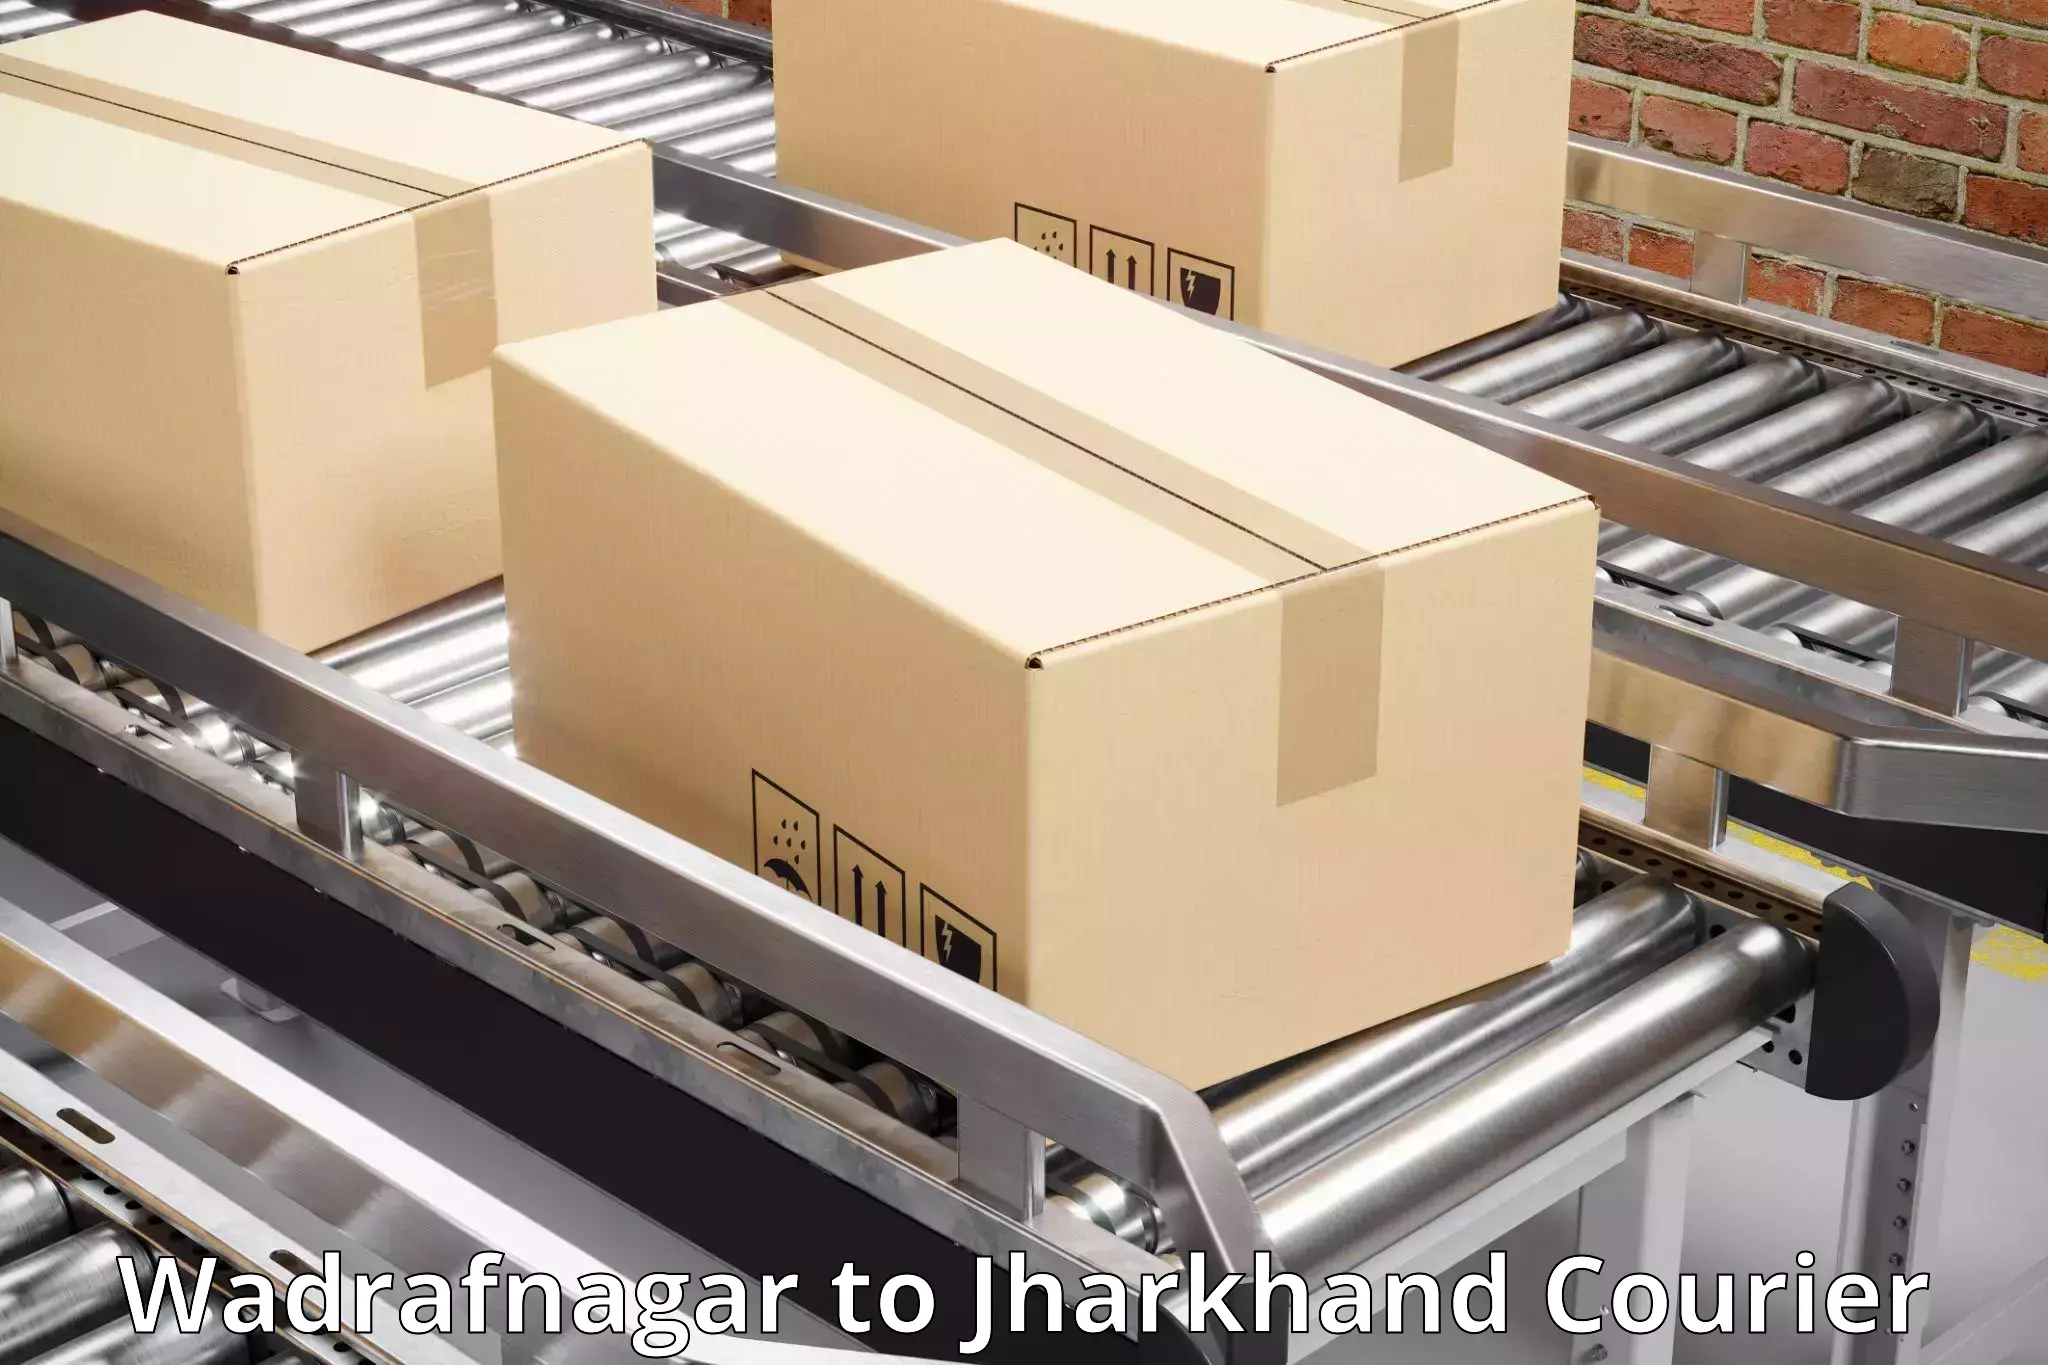 Courier service innovation Wadrafnagar to East Singhbhum